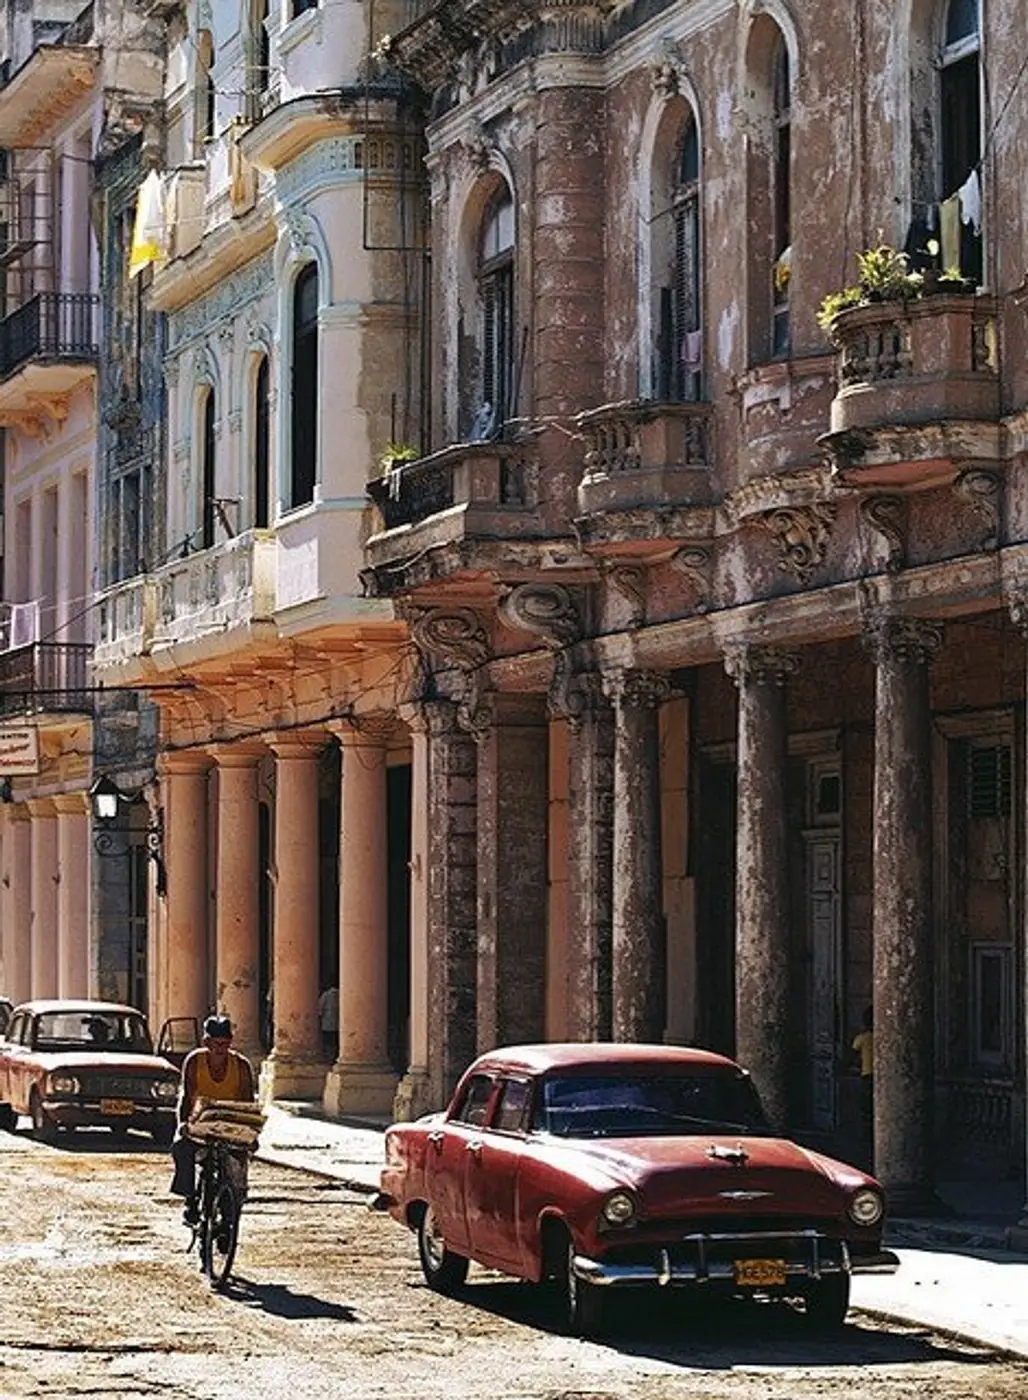 Seek Some Vintage Style in Havana, Cuba